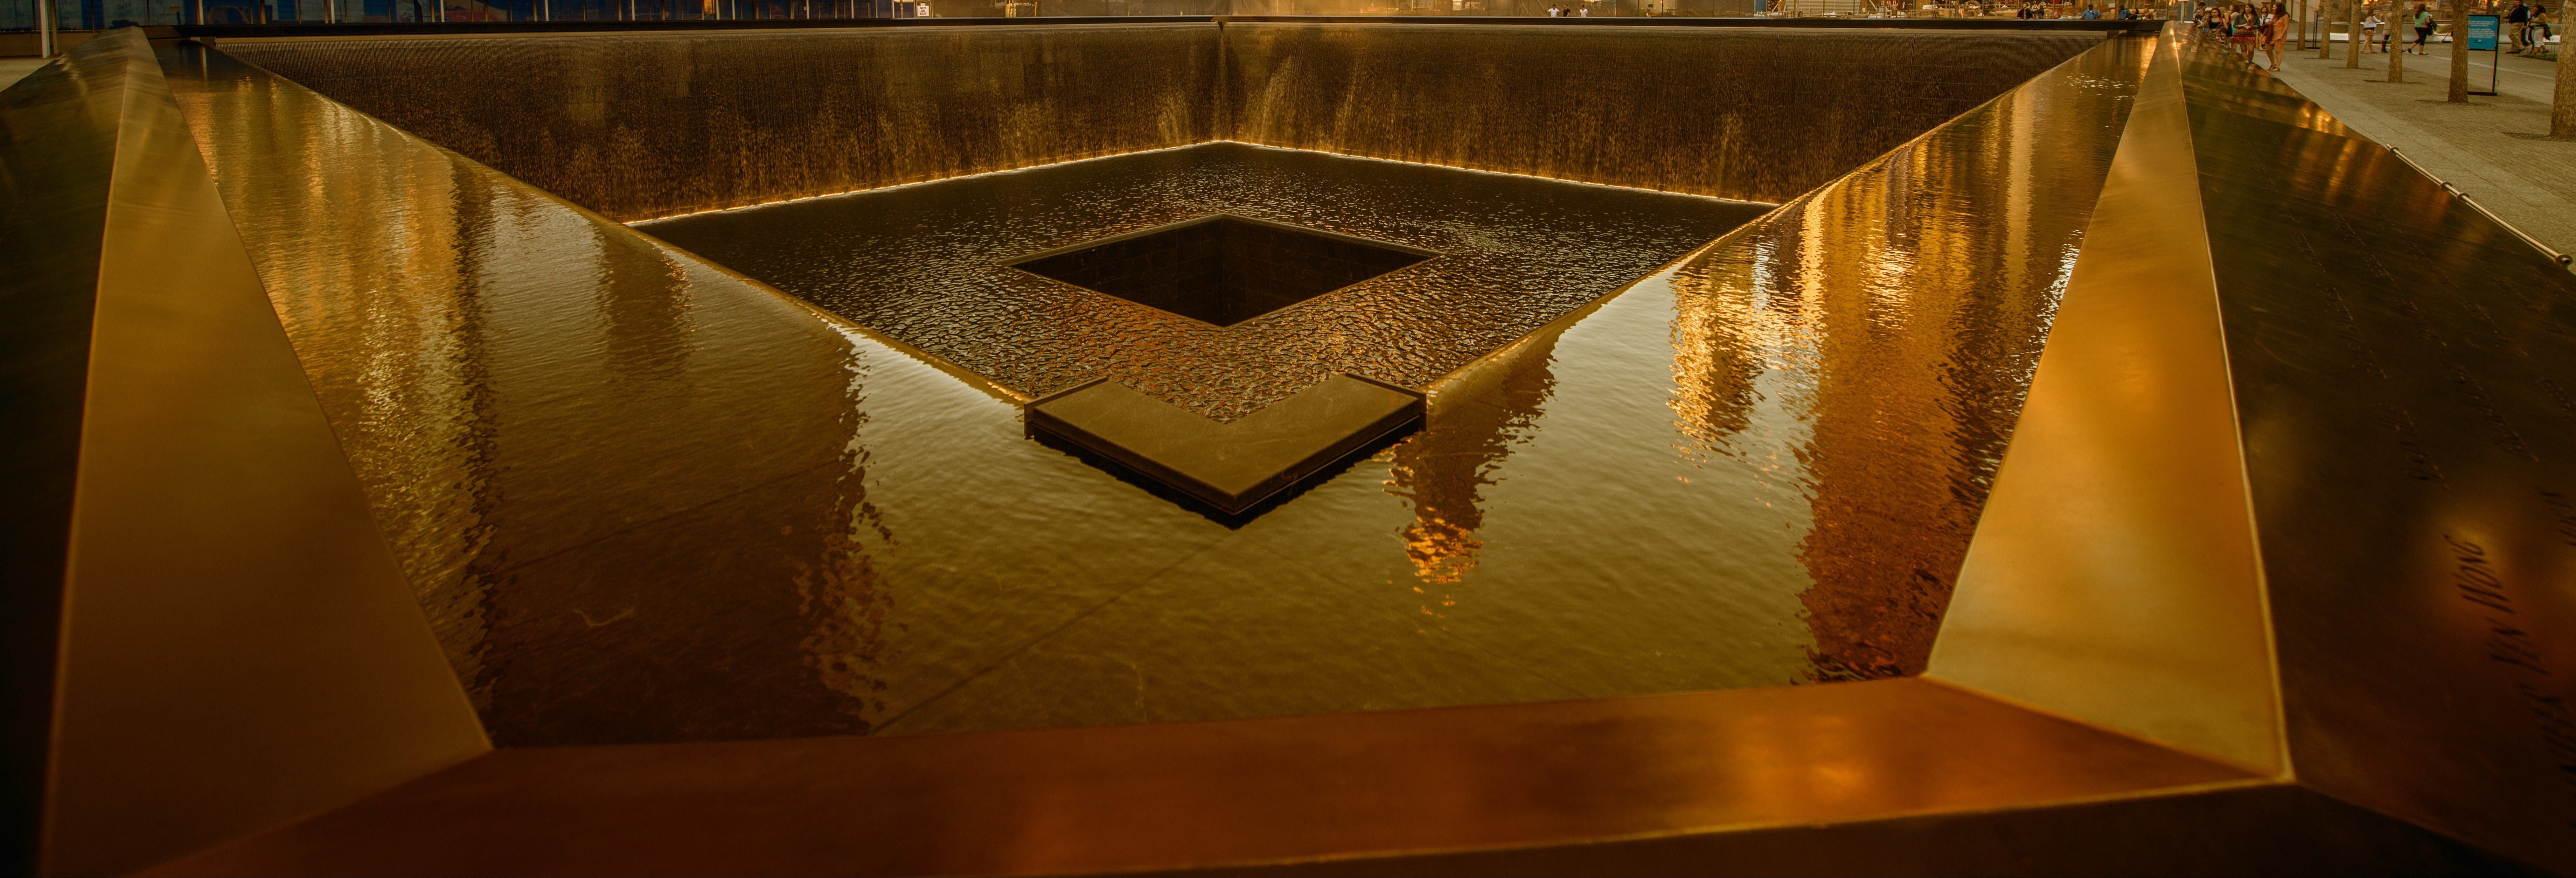 Tickets To The 9 11 Museum And Memorial New York Civitatis Com